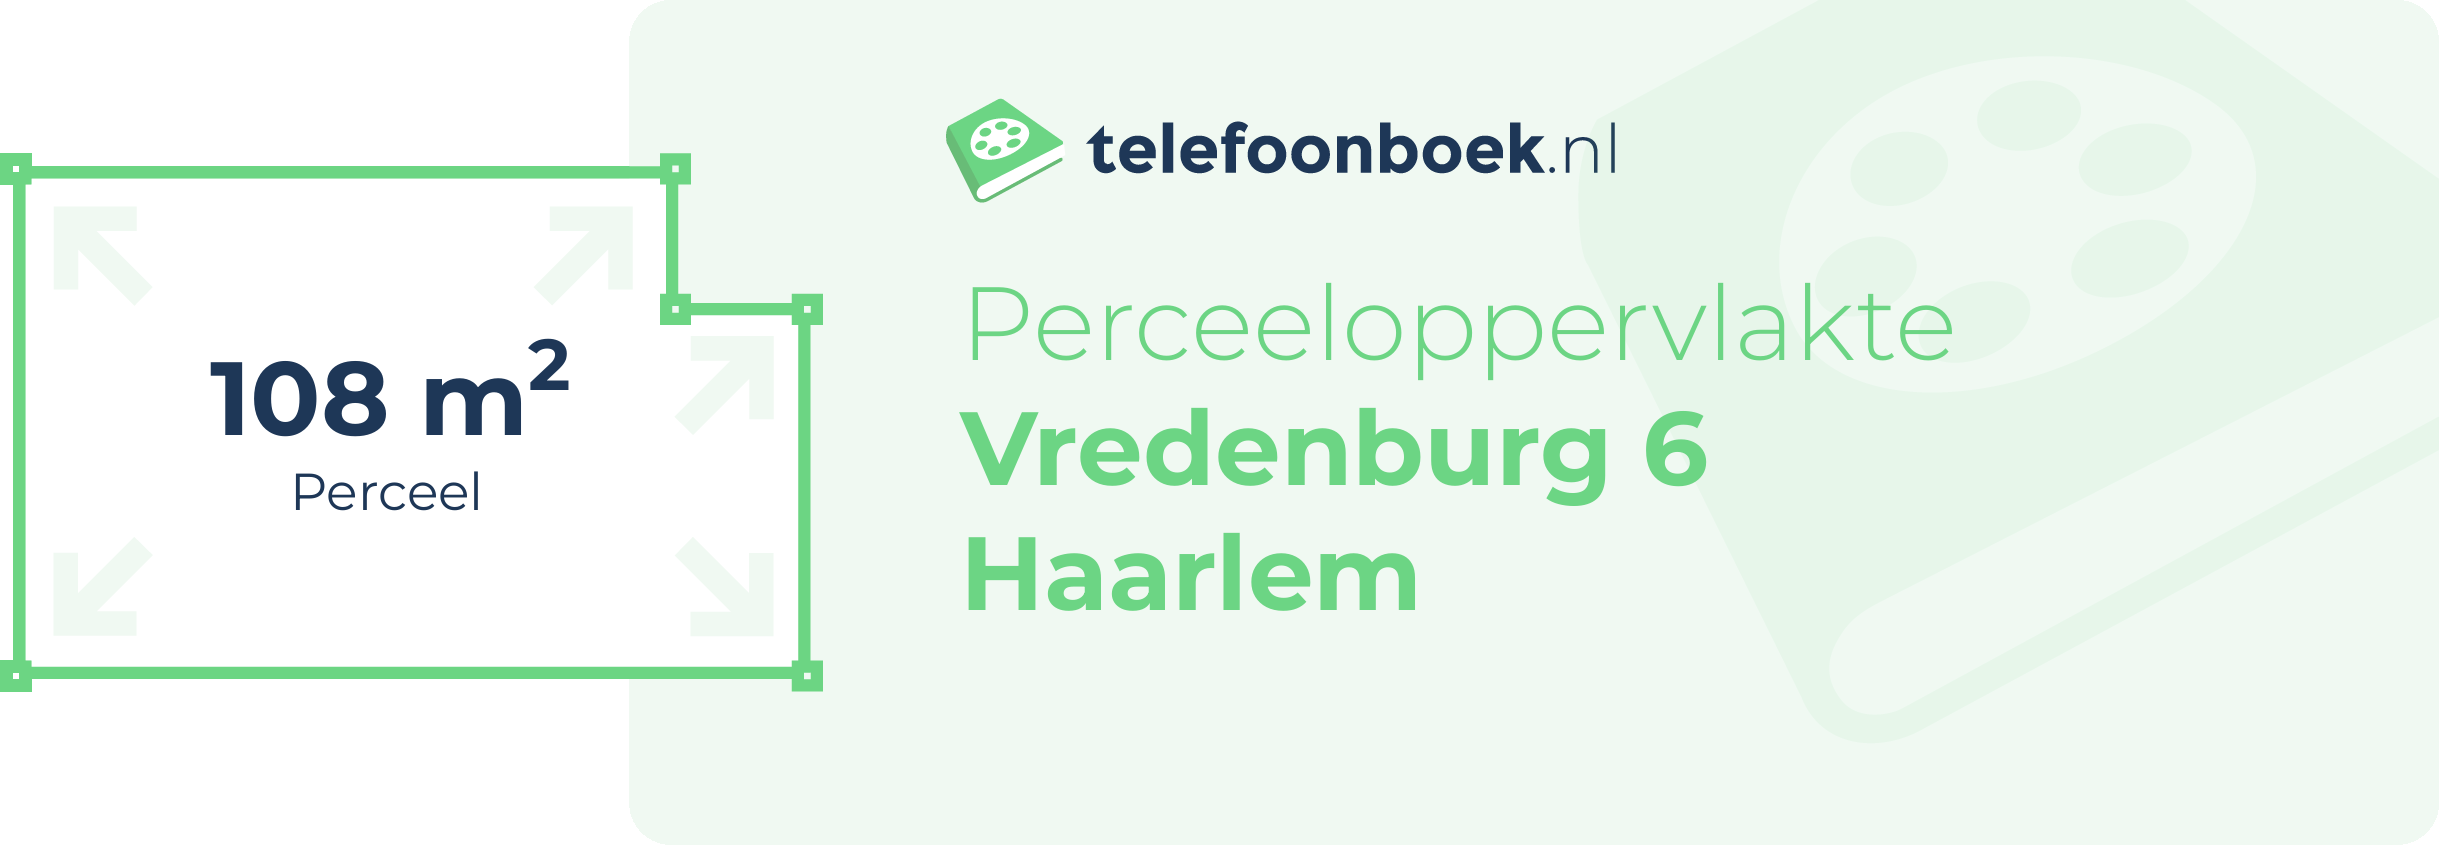 Perceeloppervlakte Vredenburg 6 Haarlem